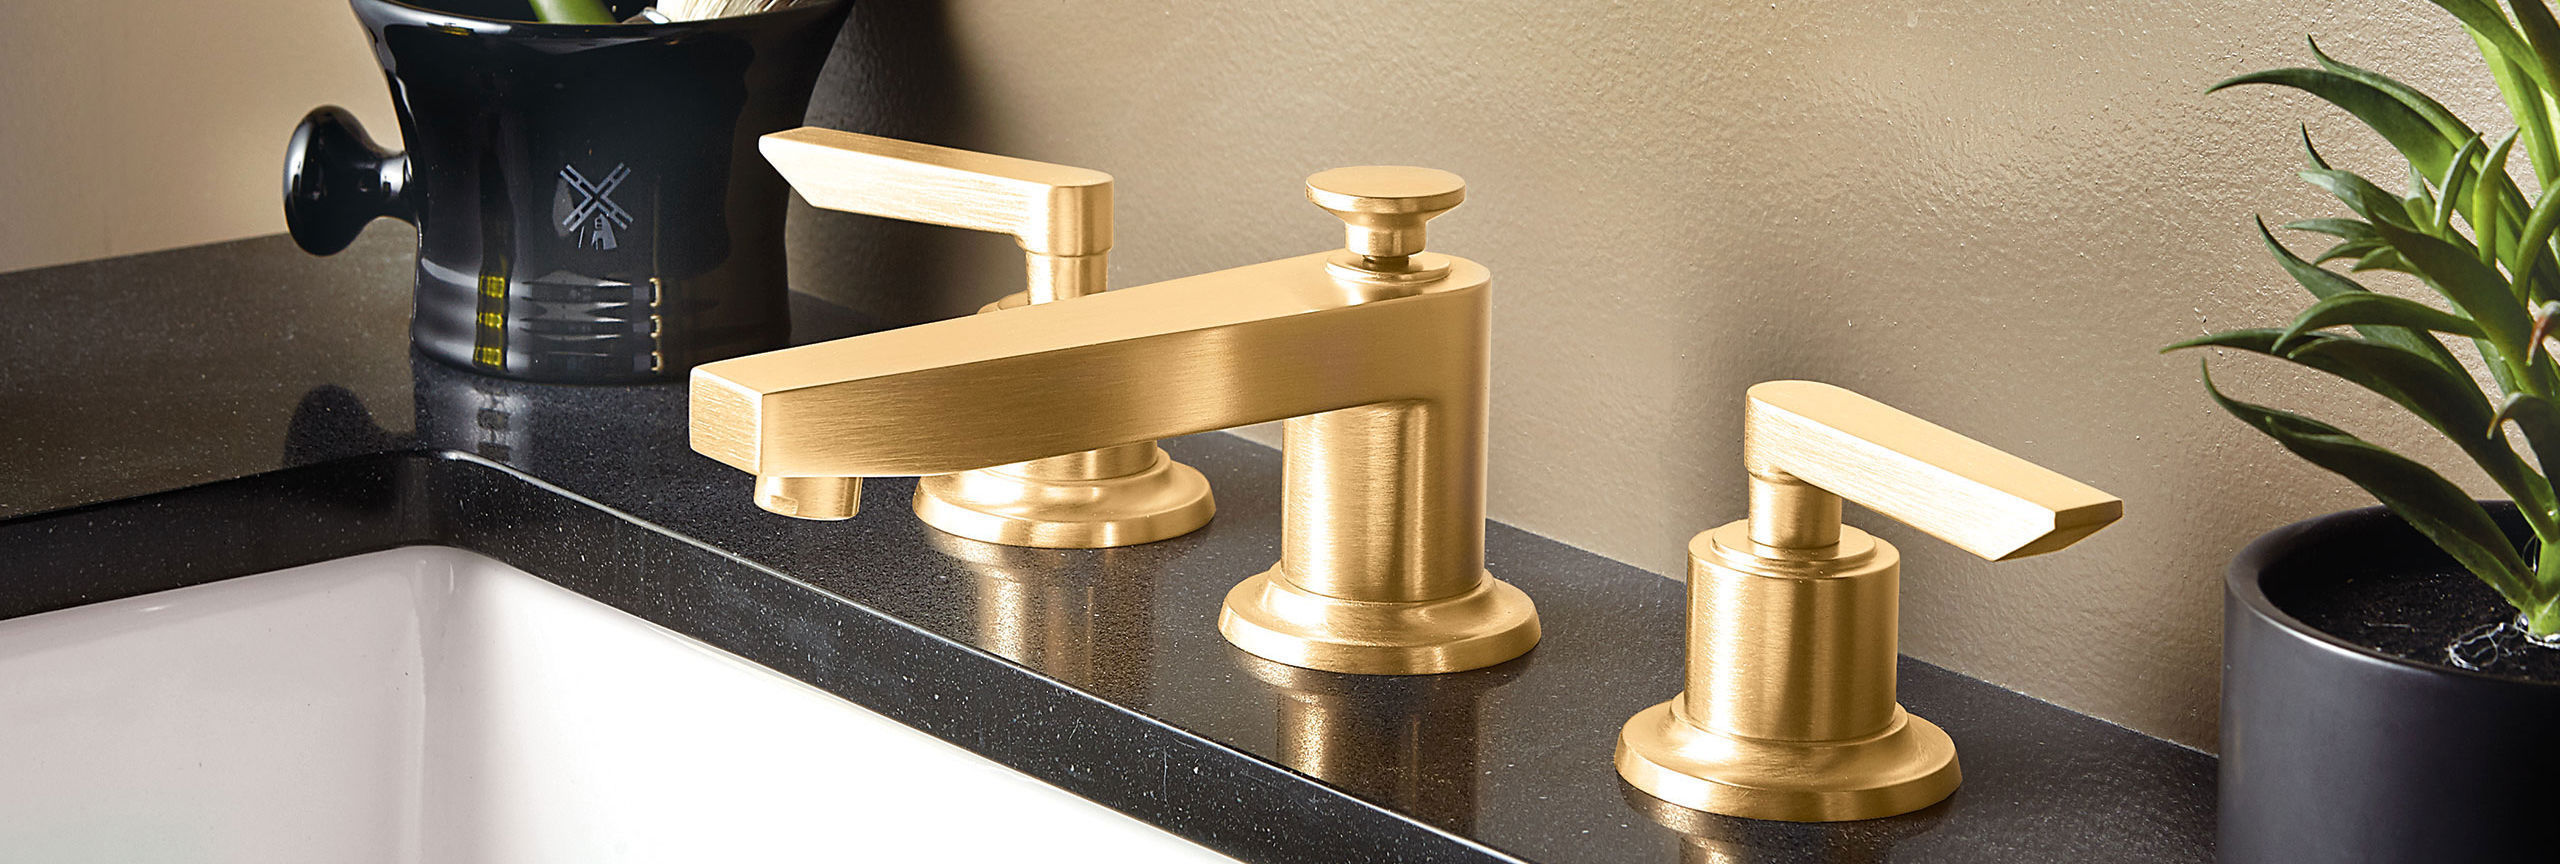 bathroom series rincon bay widespread faucet in satin gold